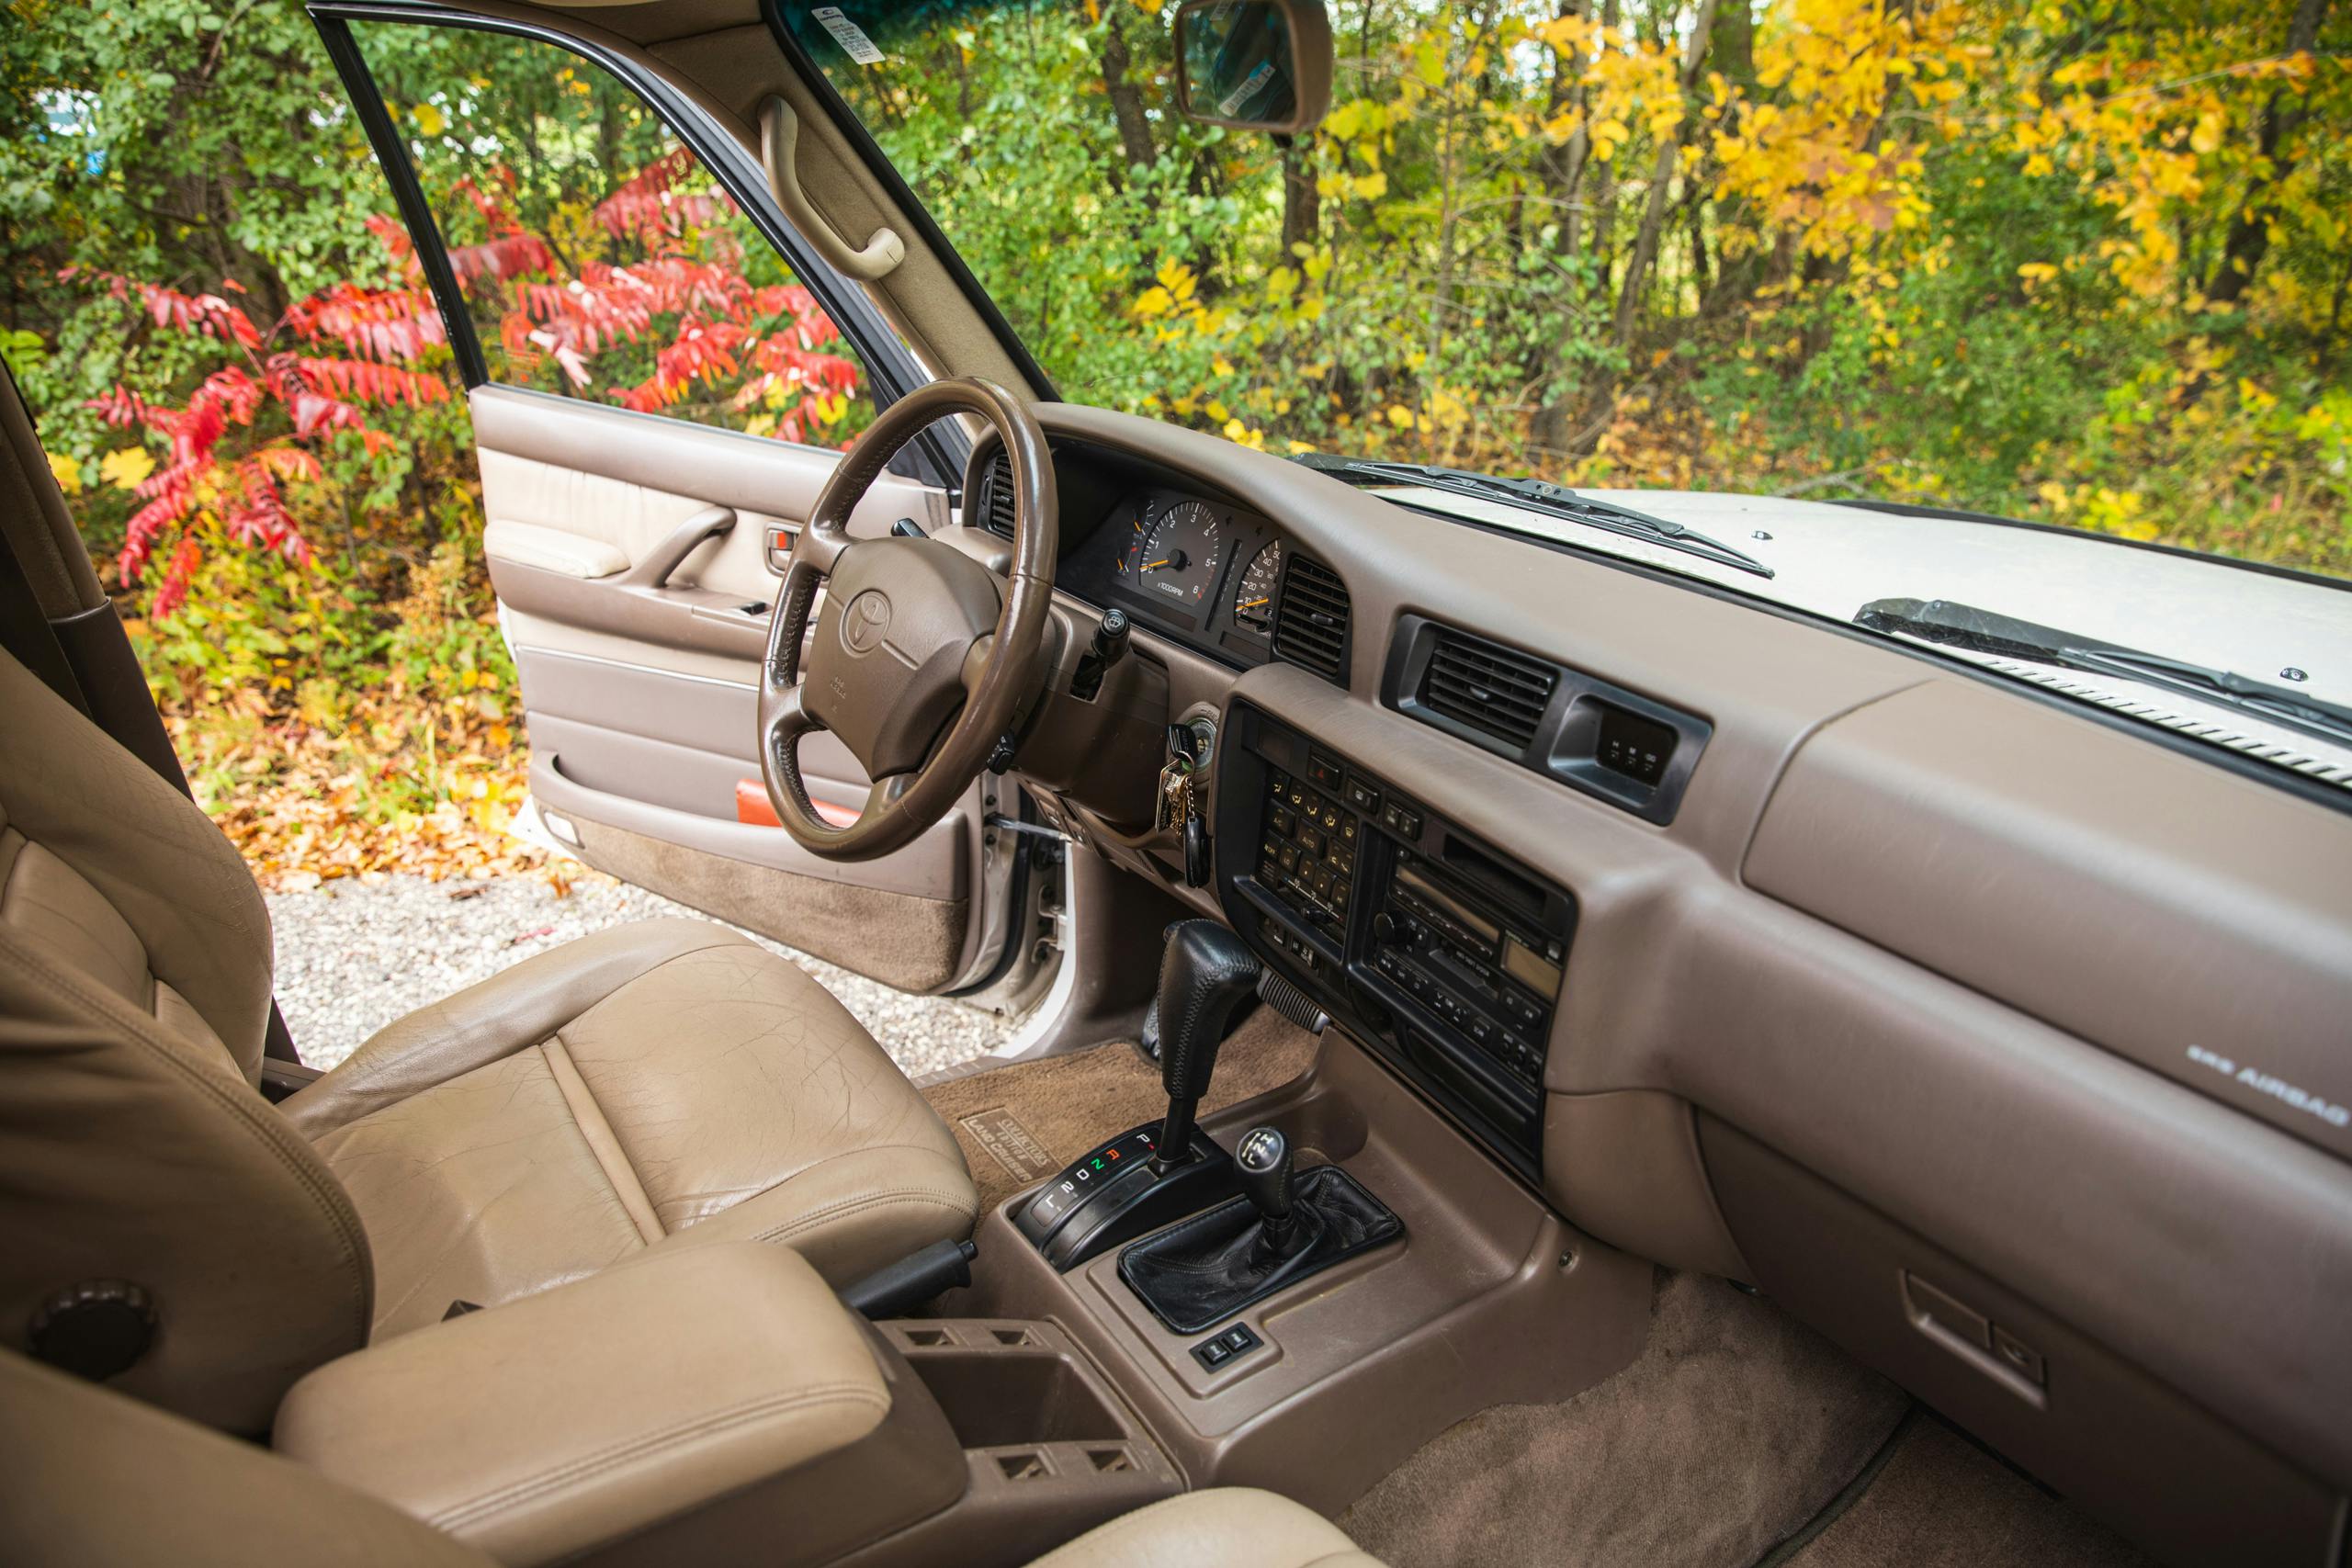 Toyota Land Cruiser FZJ80 front interior angle